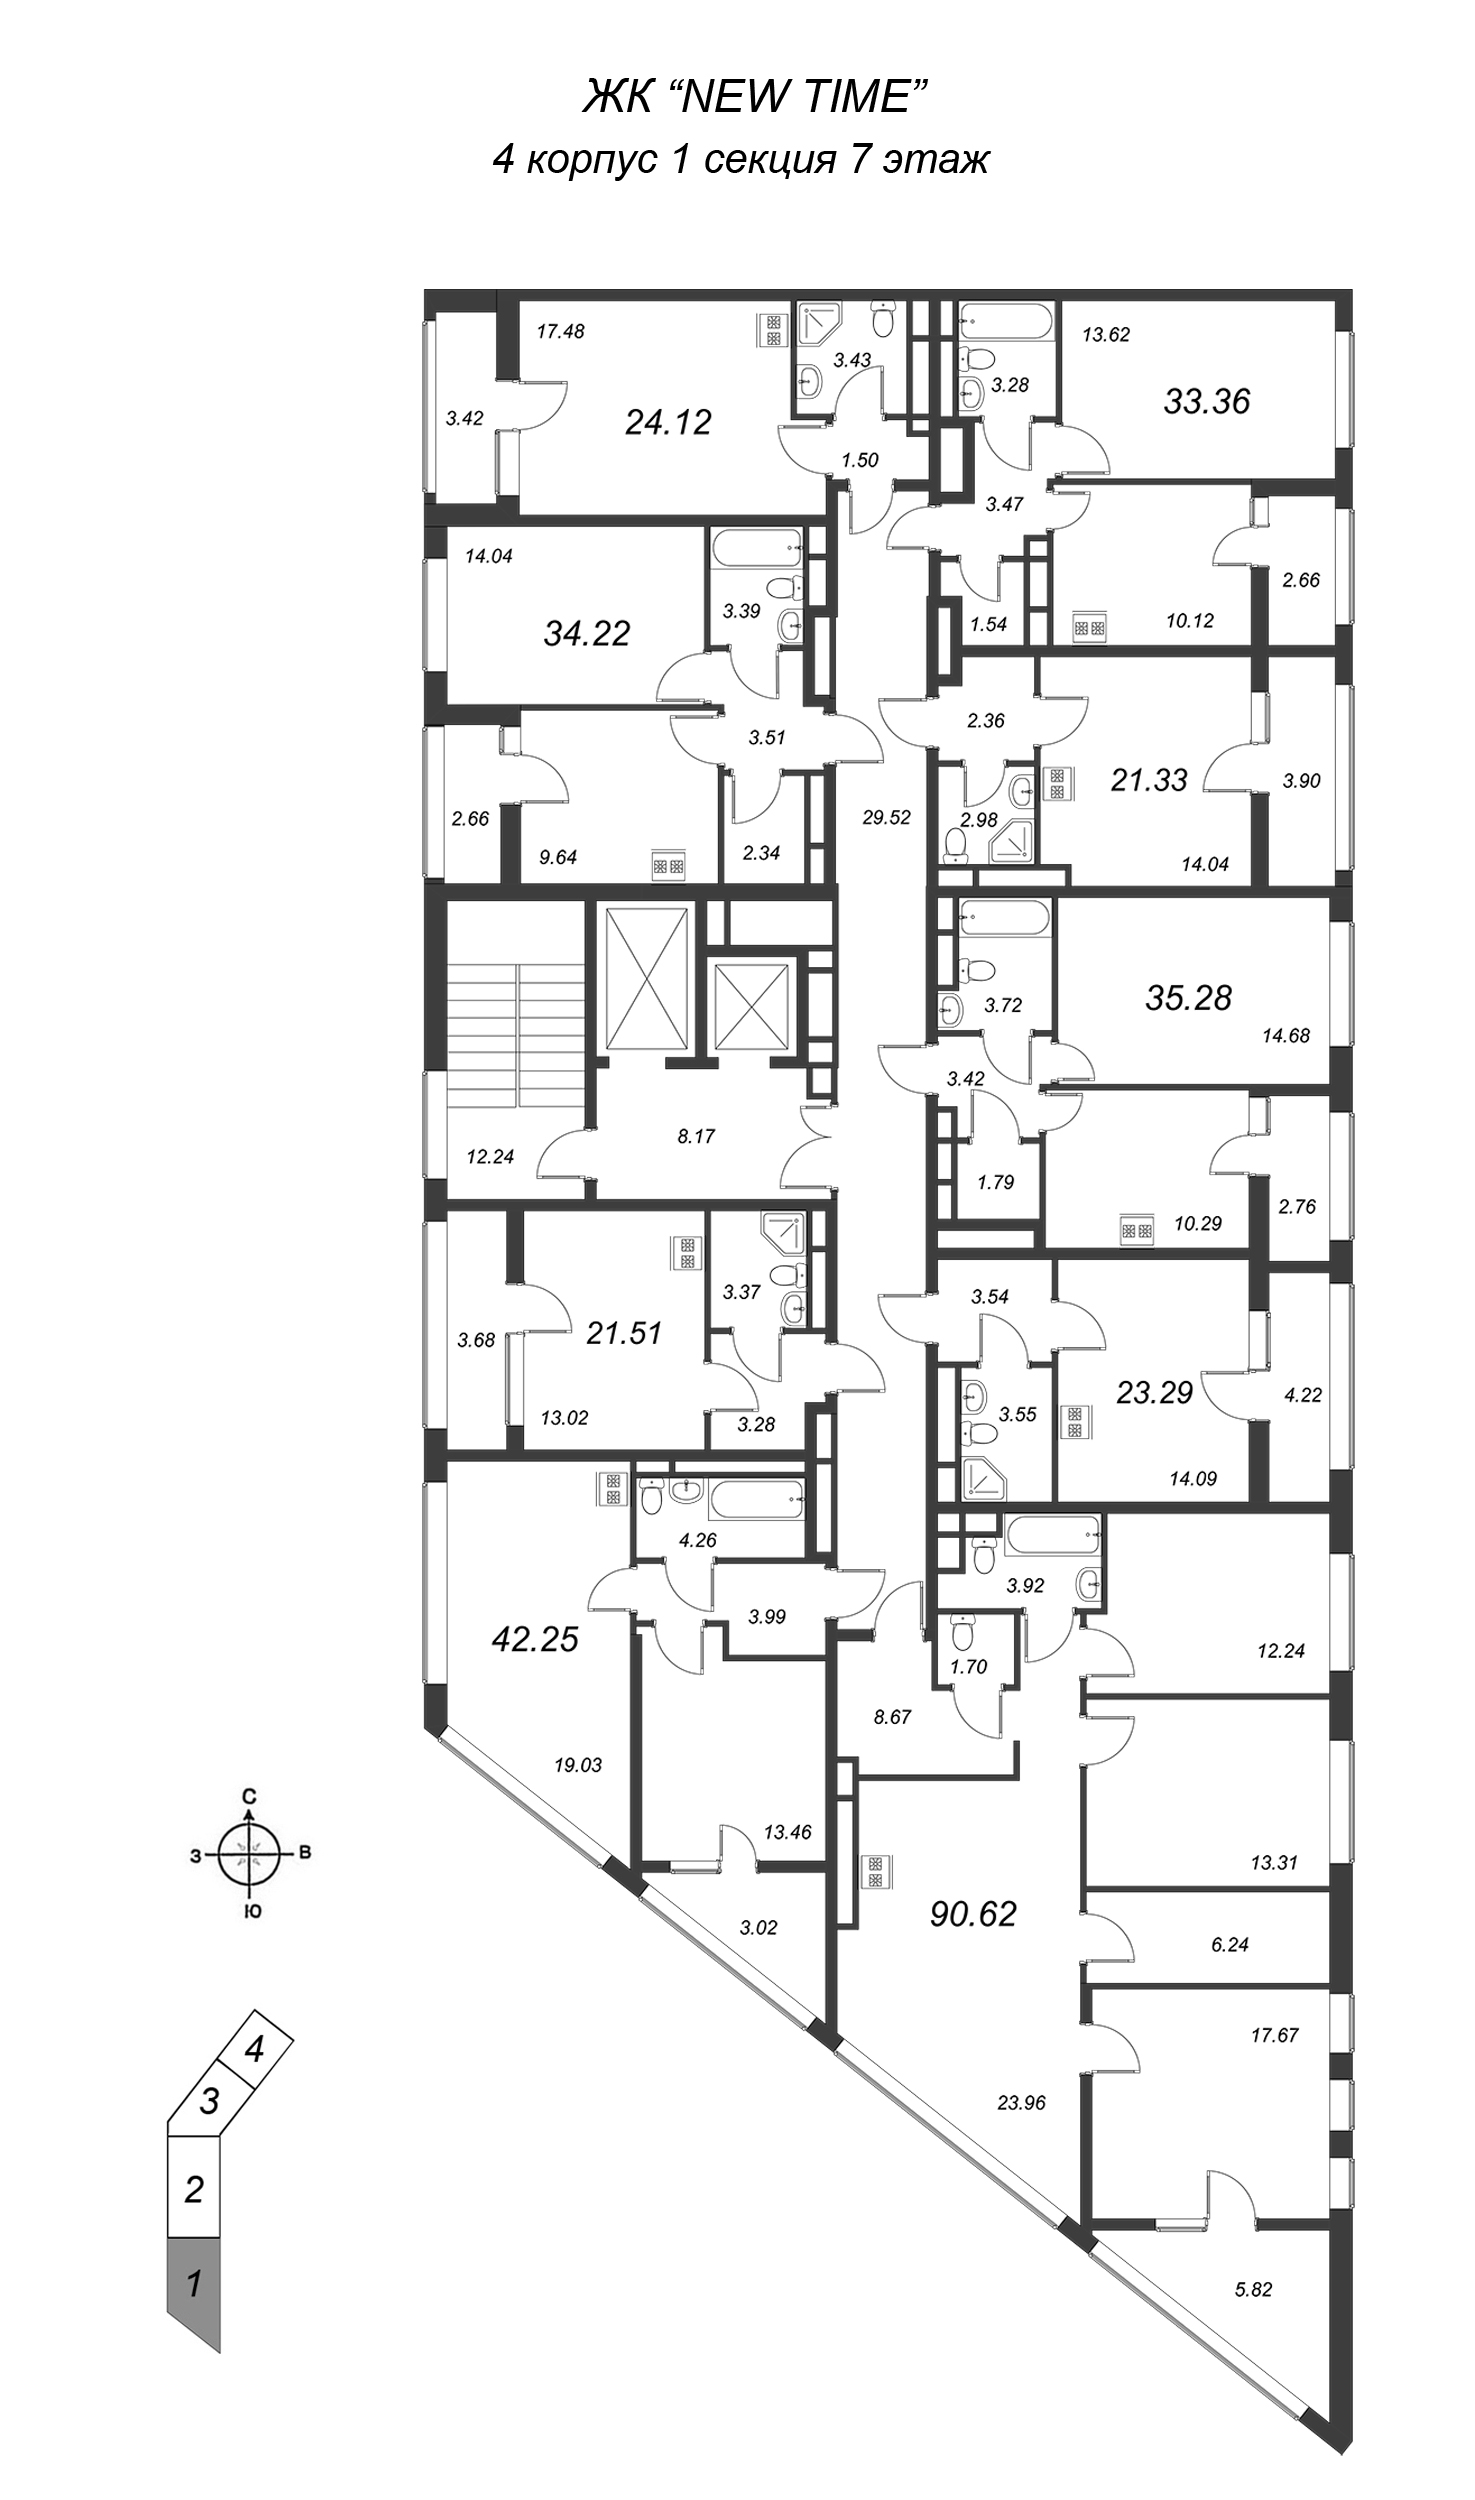 1-комнатная квартира, 43.2 м² в ЖК "New Time" - планировка этажа